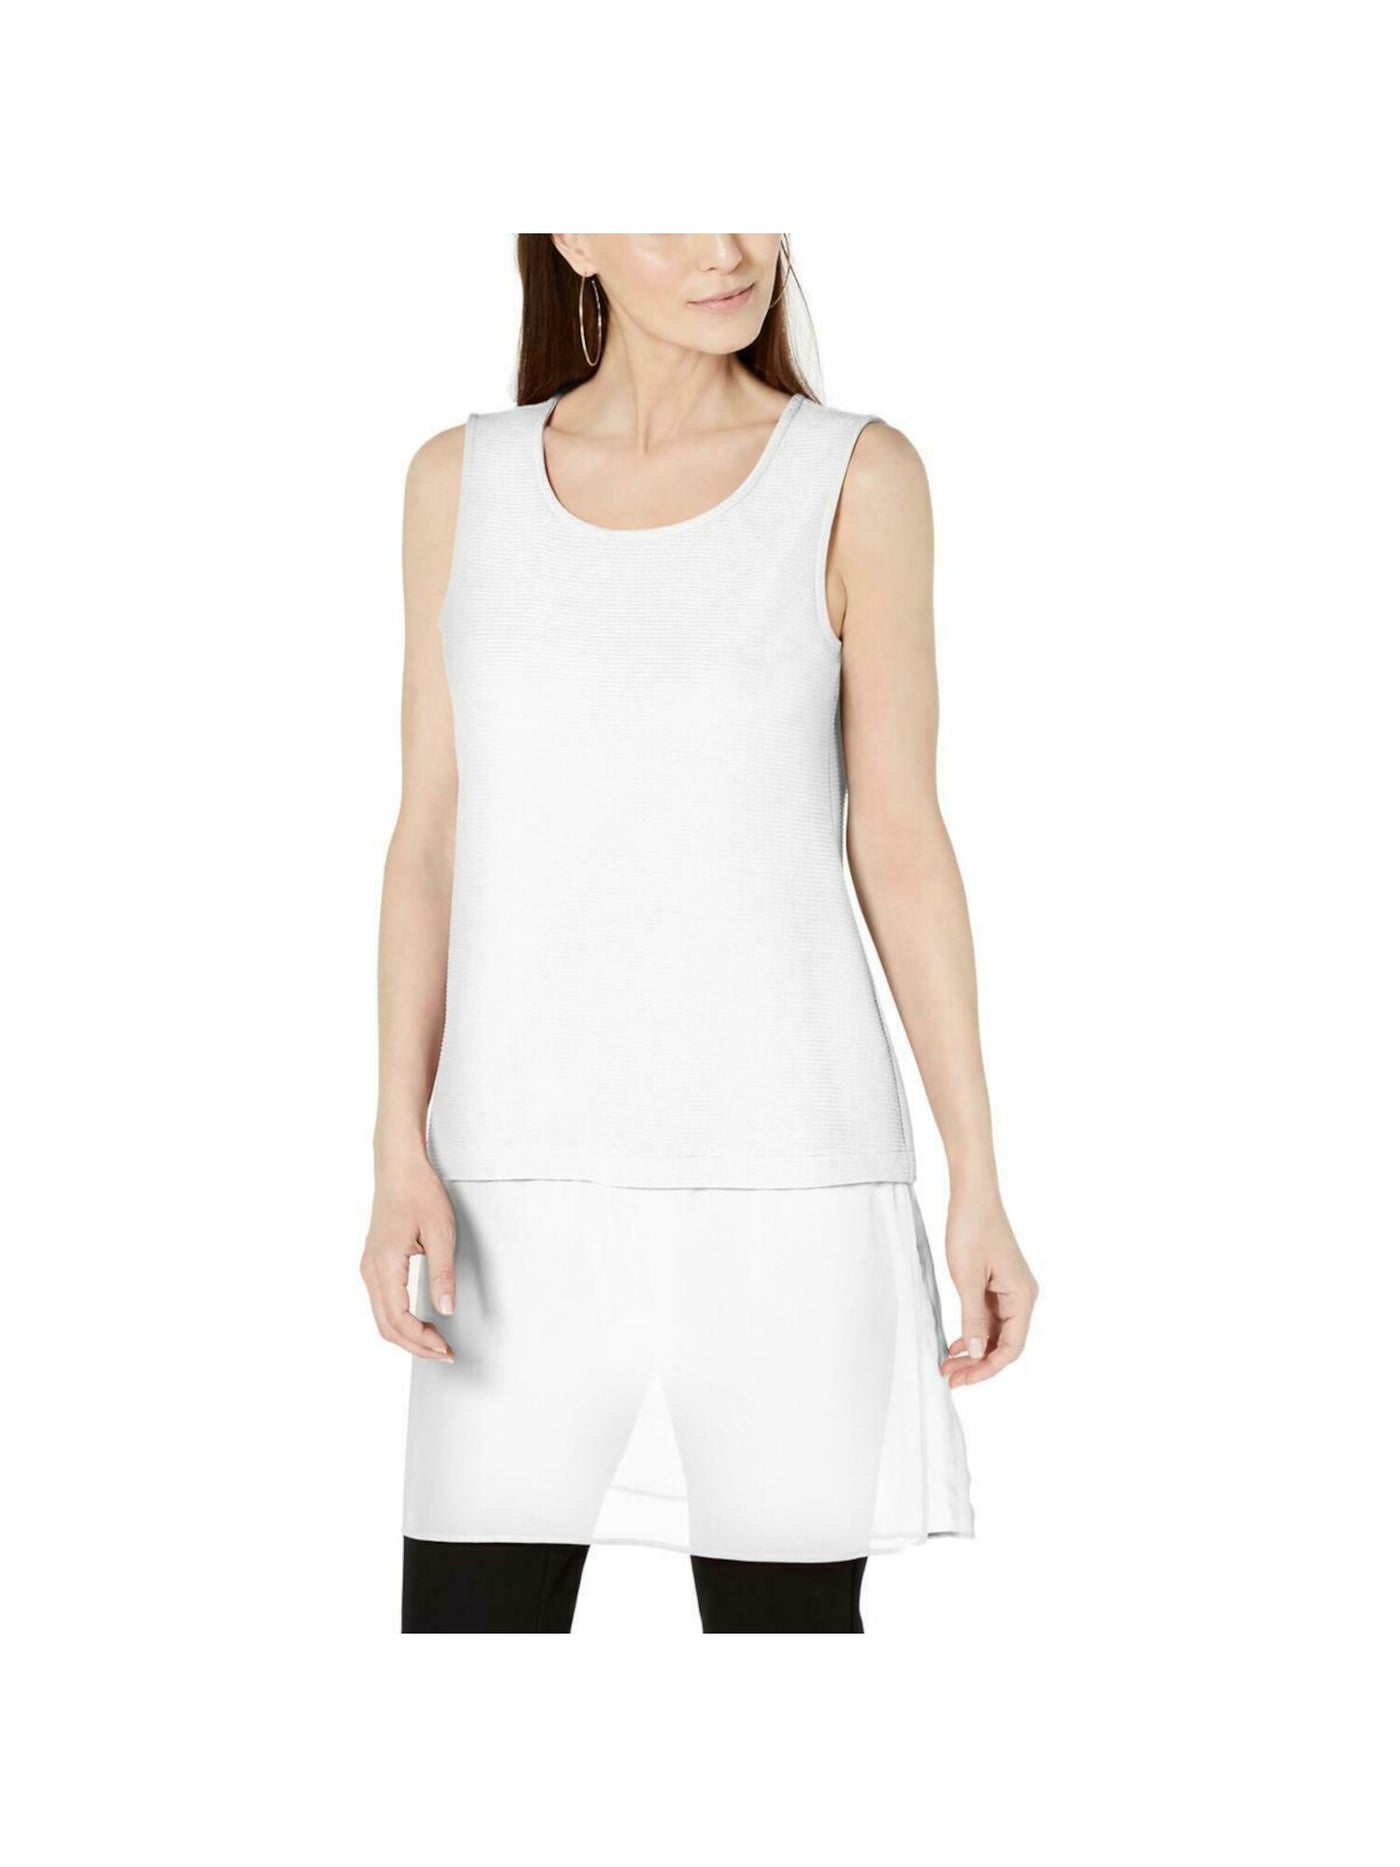 ALFANI Womens White Sleeveless Scoop Neck Wear To Work Blouse L